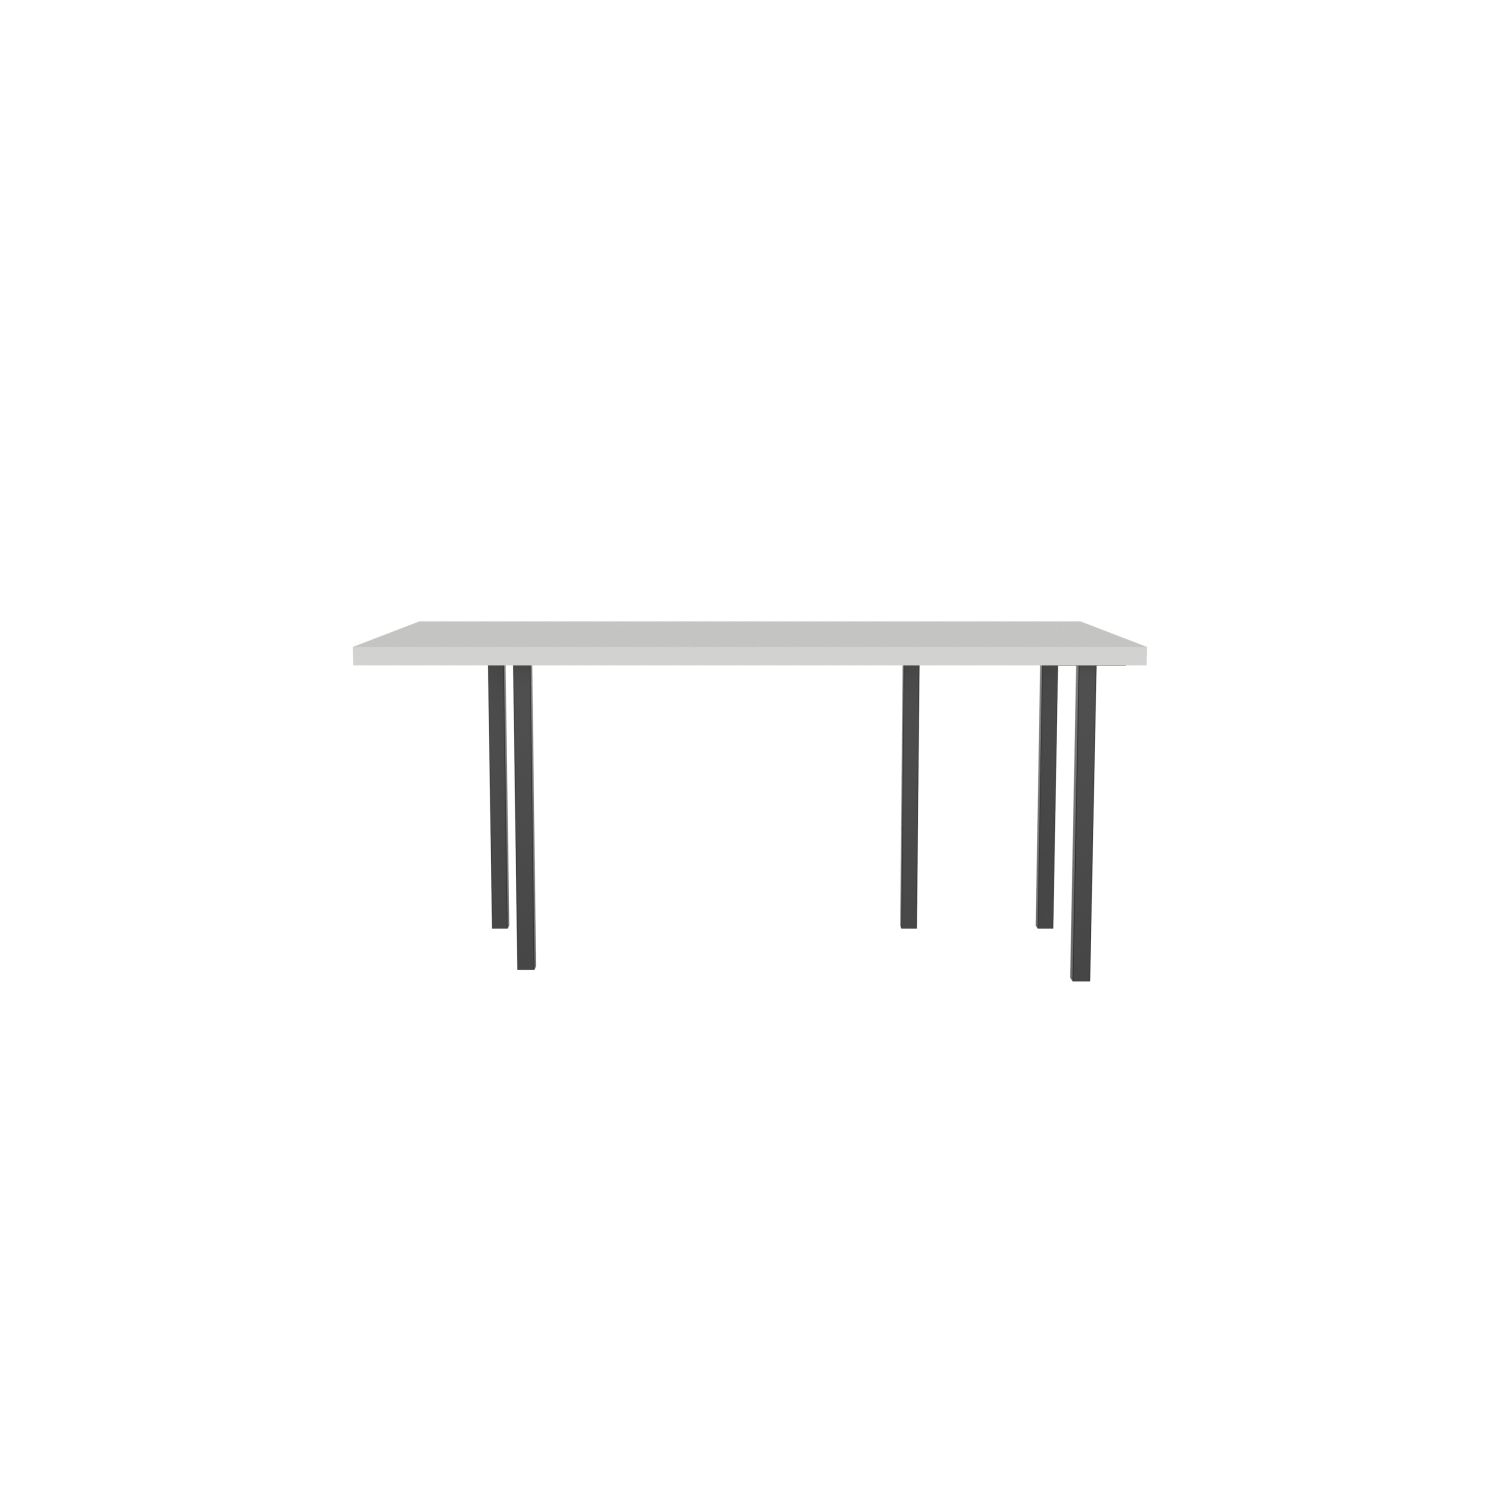 lensvelt bbrand table five fixed heigt 915x172 hpl boring grey 50 mm price level 1 black ral9005